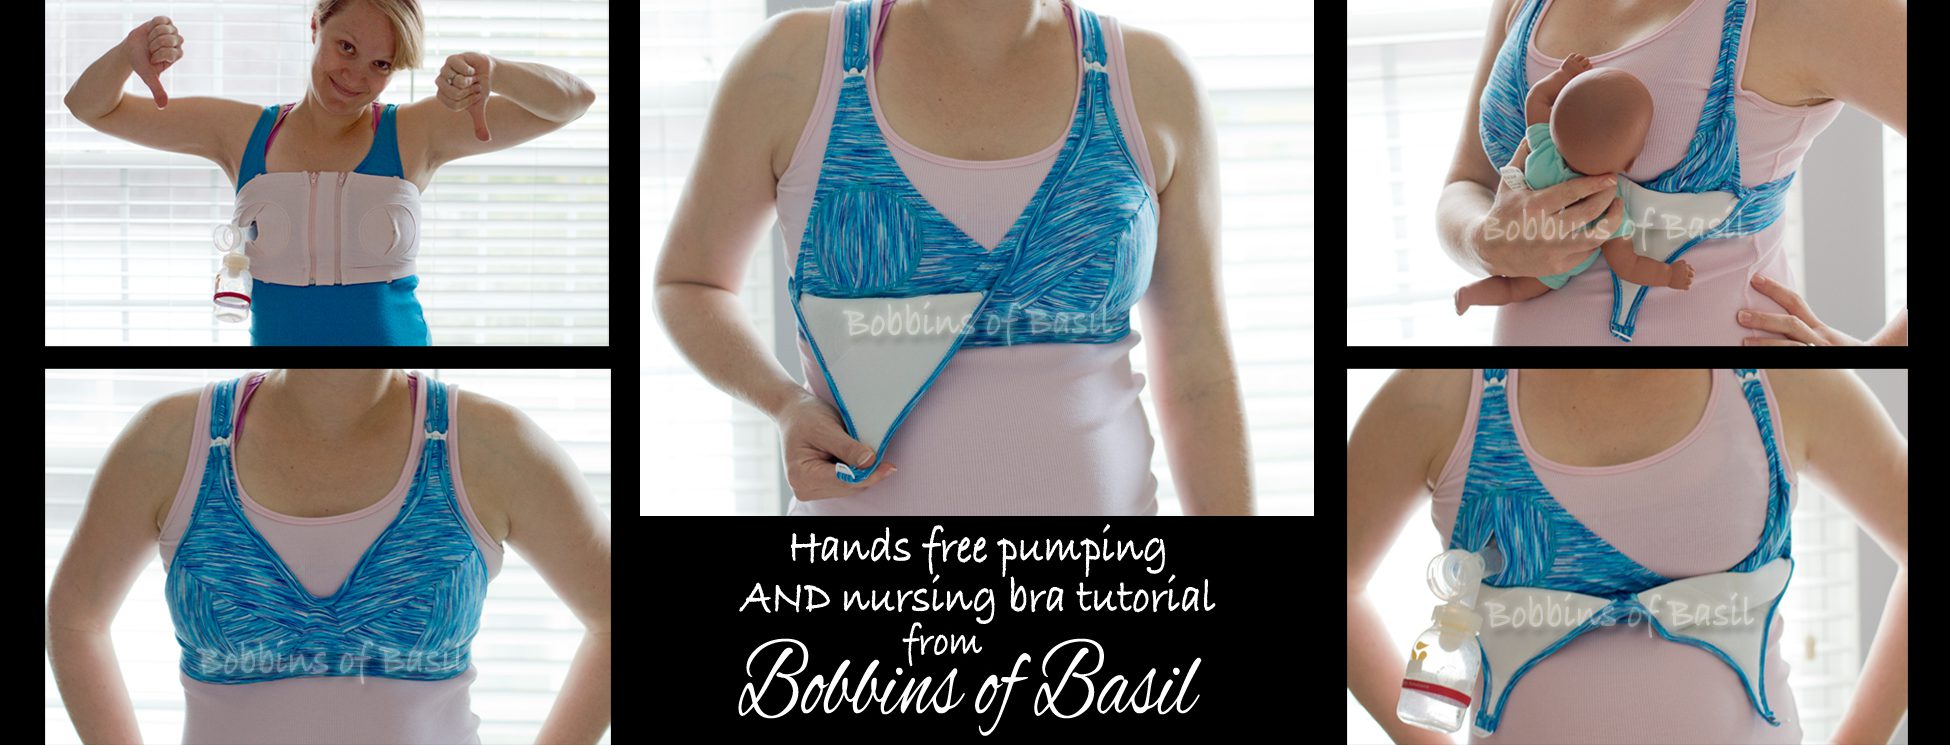 Nursing AND Hands-Free Pumping Bra Tutorial – Bobbins of Basil